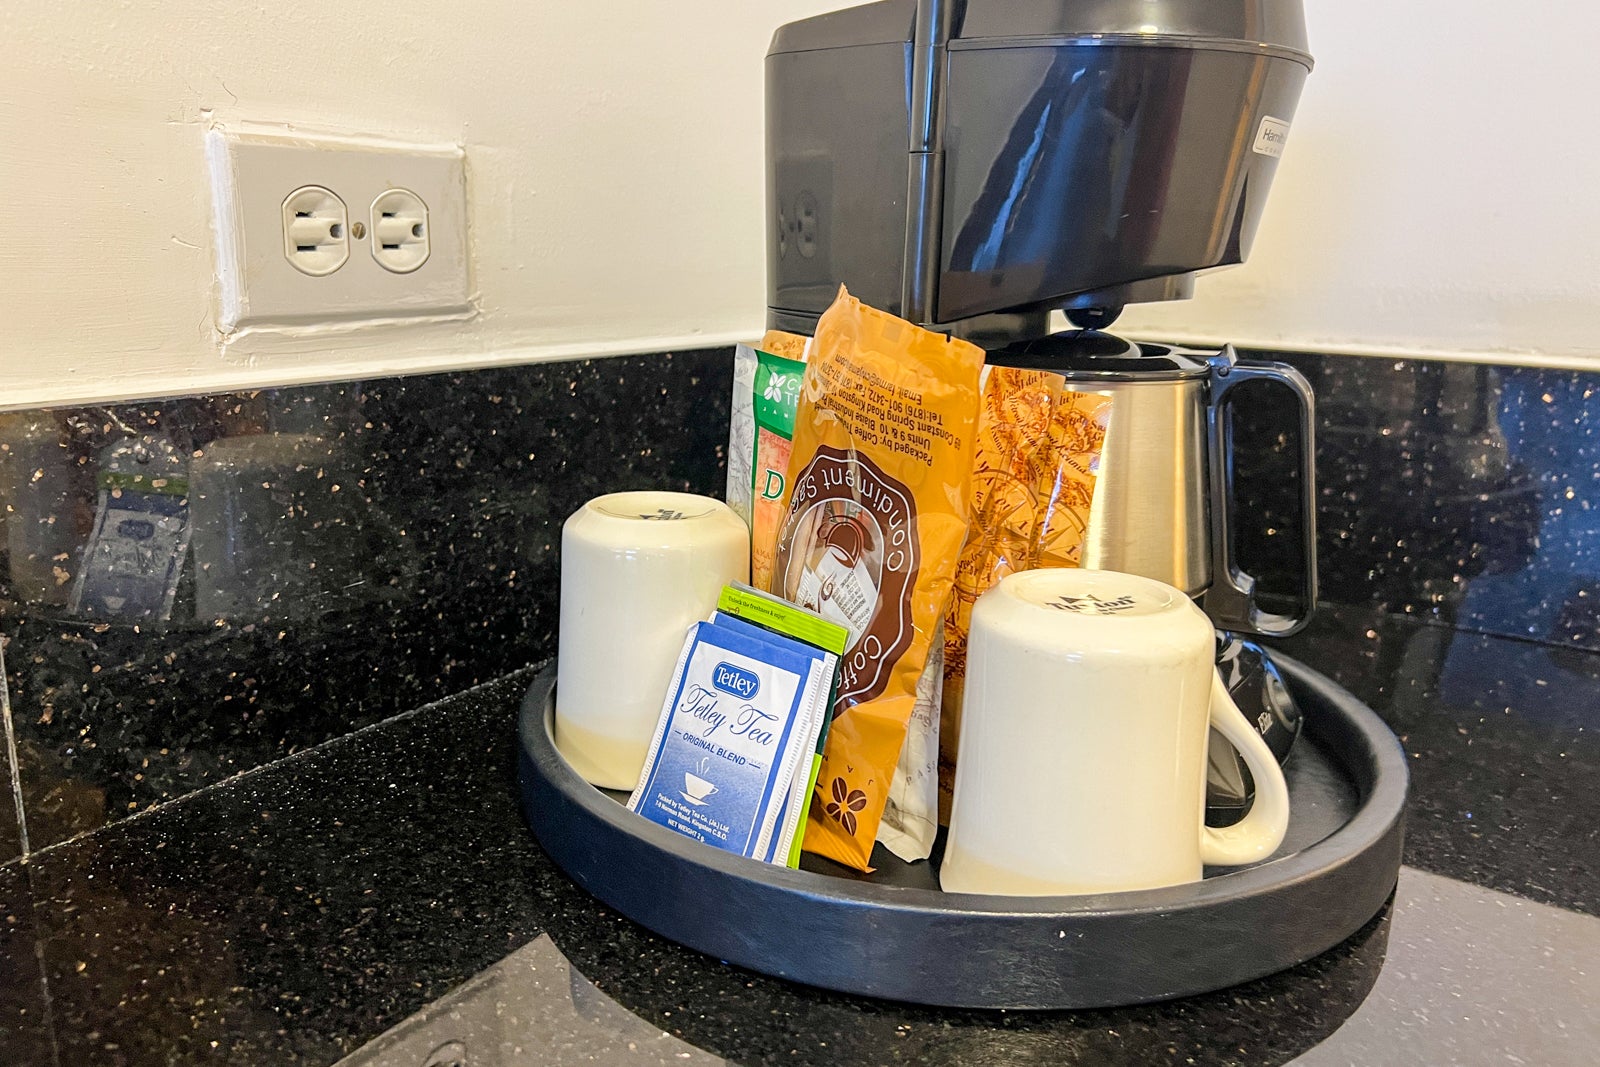 Coffee maker in hotel room